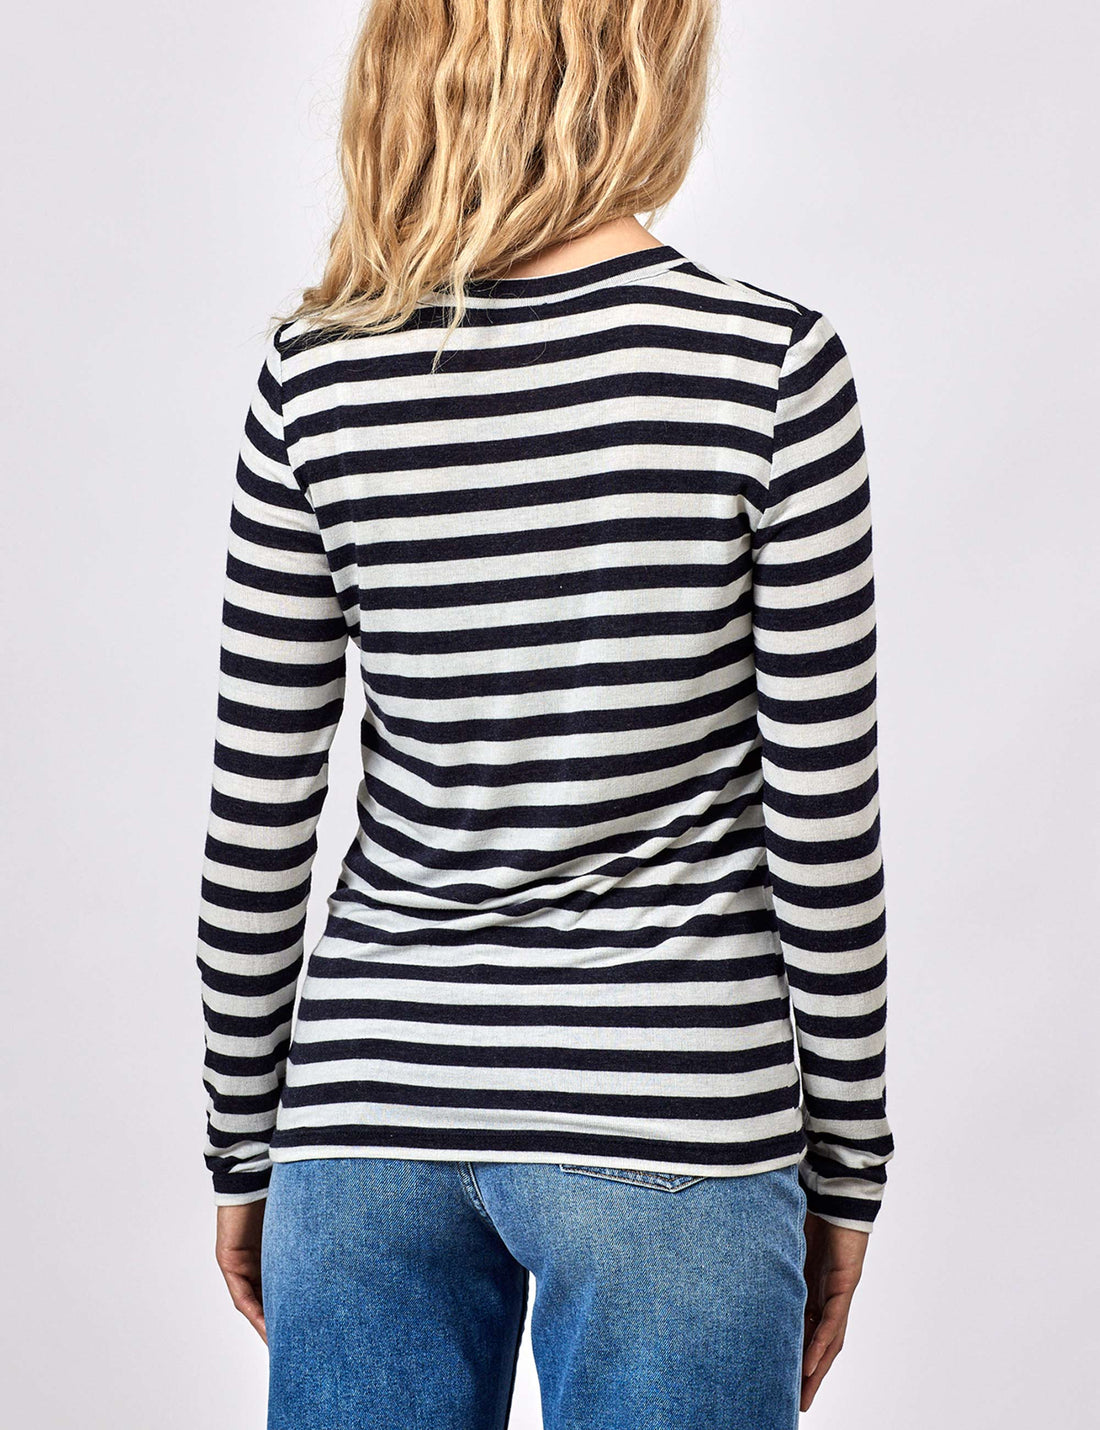 April blouse off white/navy stripes